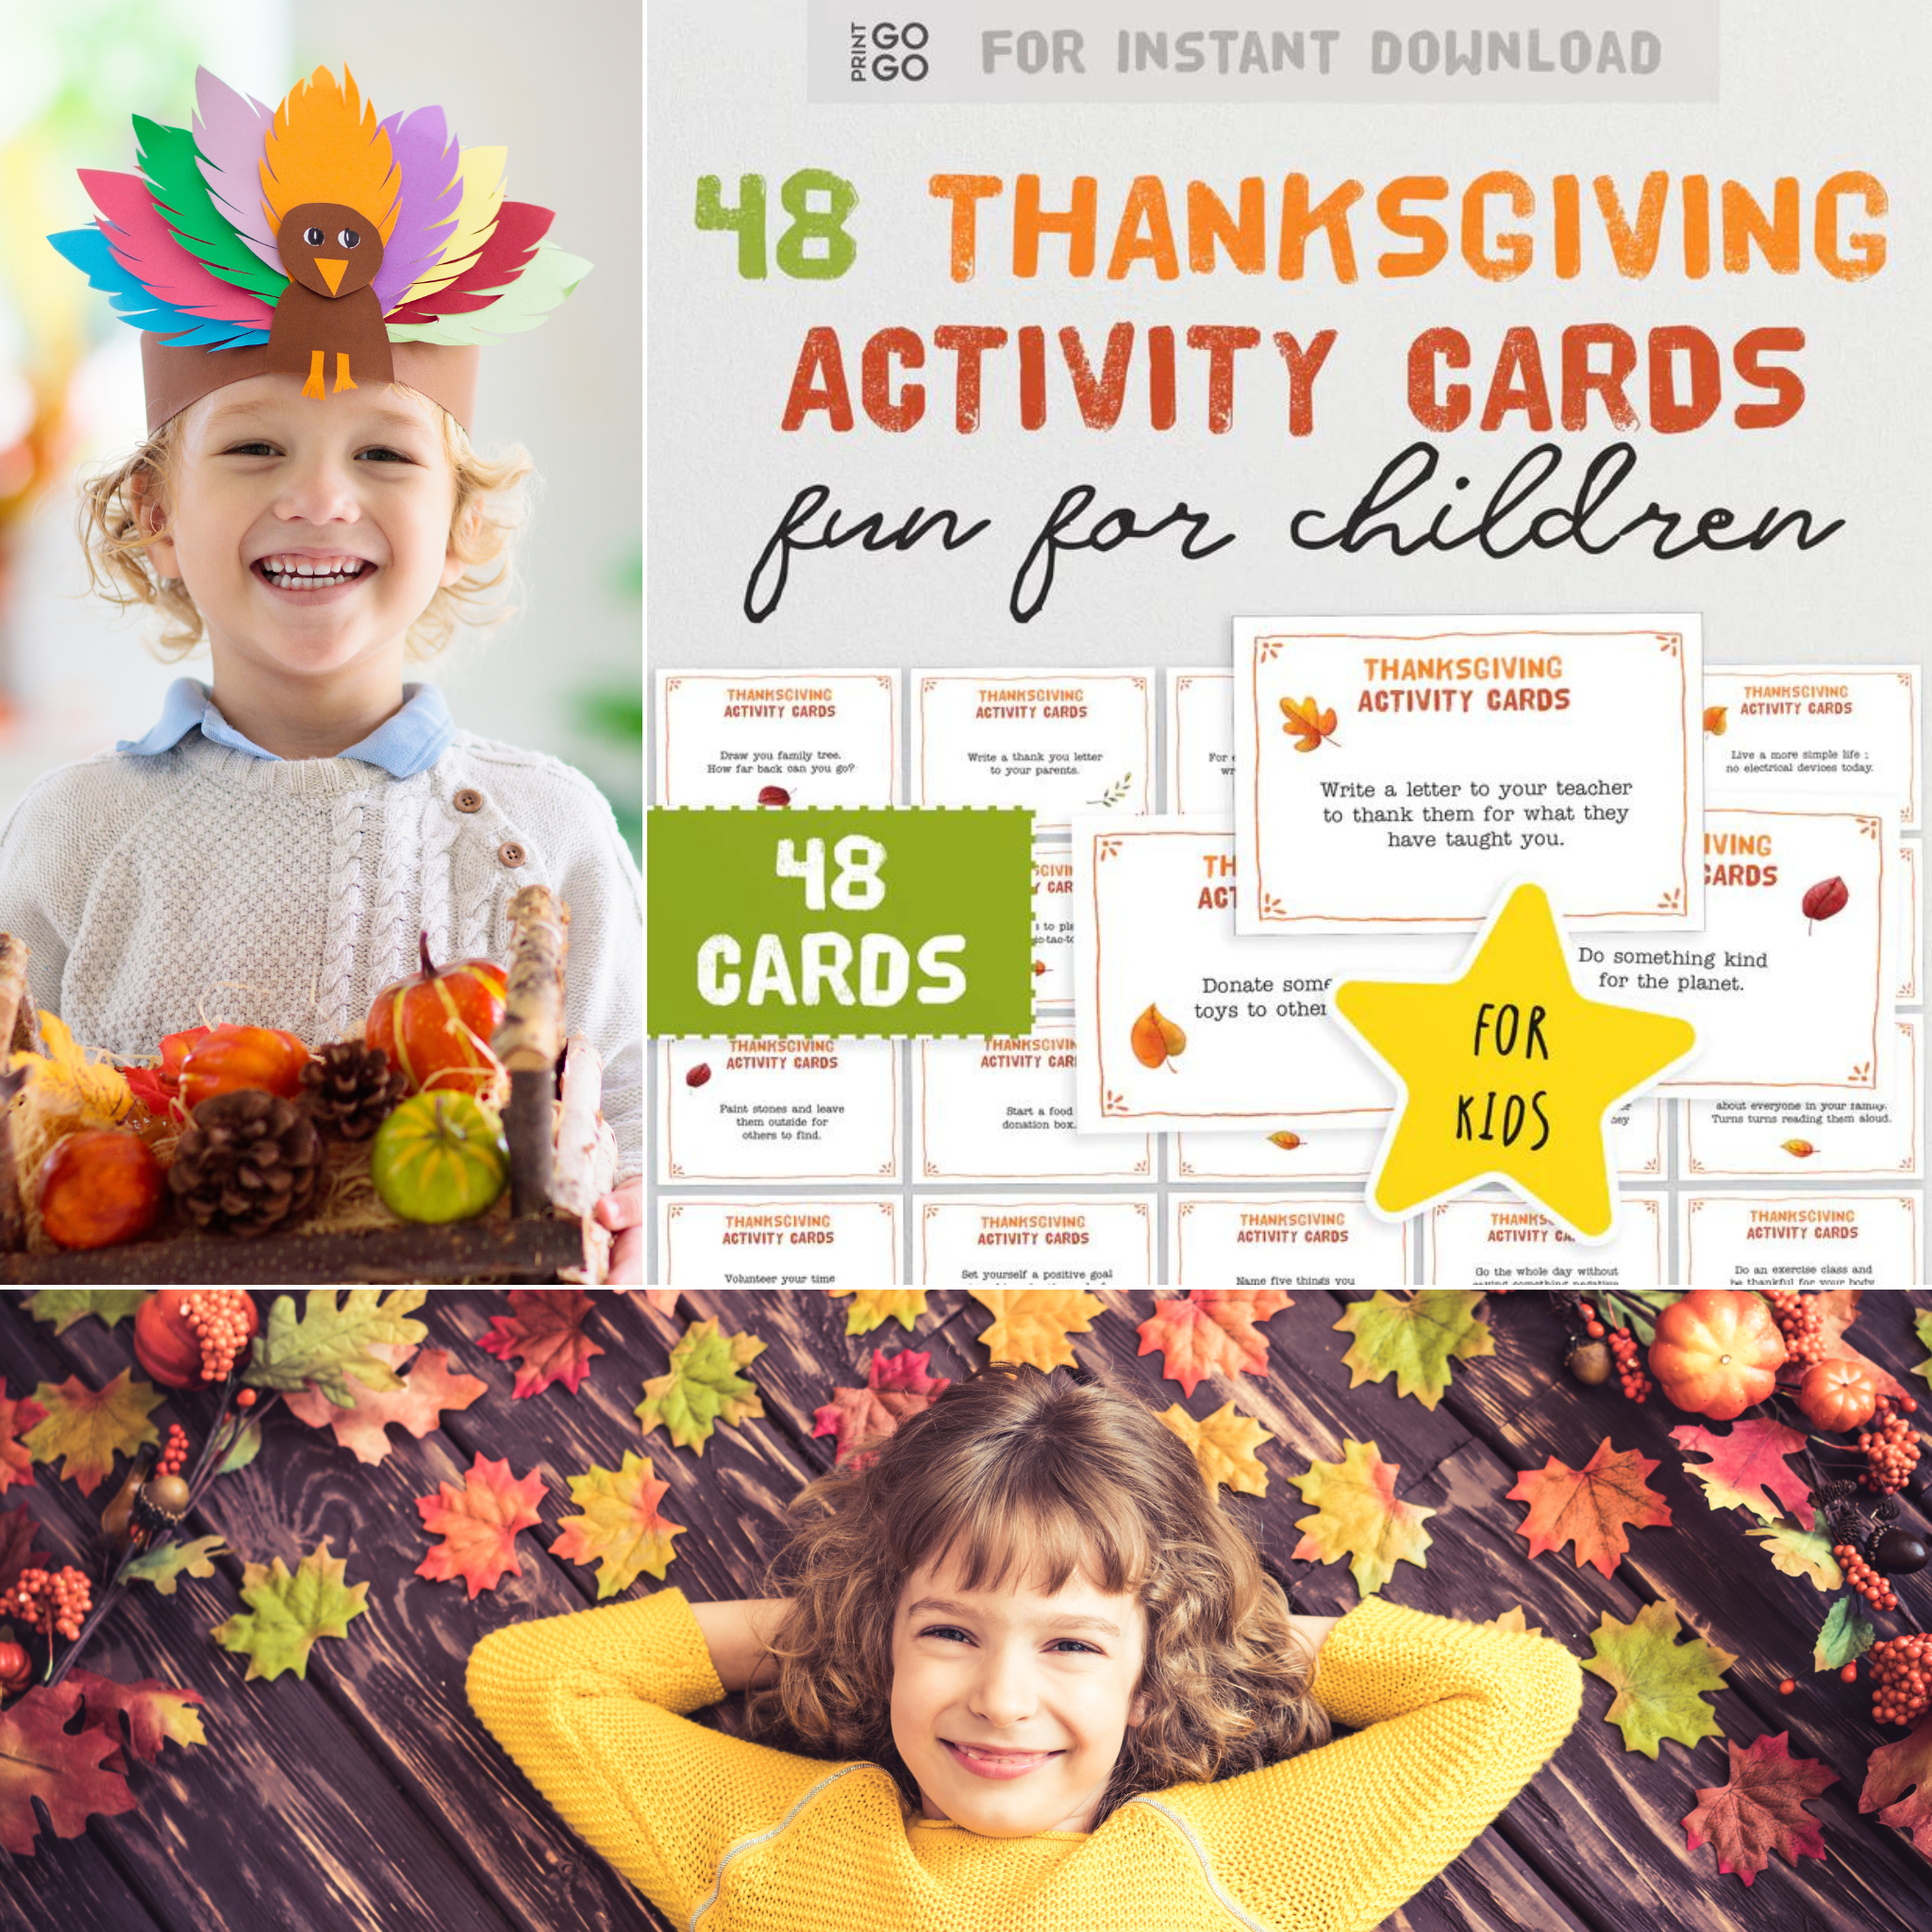 48 Fun + Achievable Thanksgiving Activity Ideas for Children!